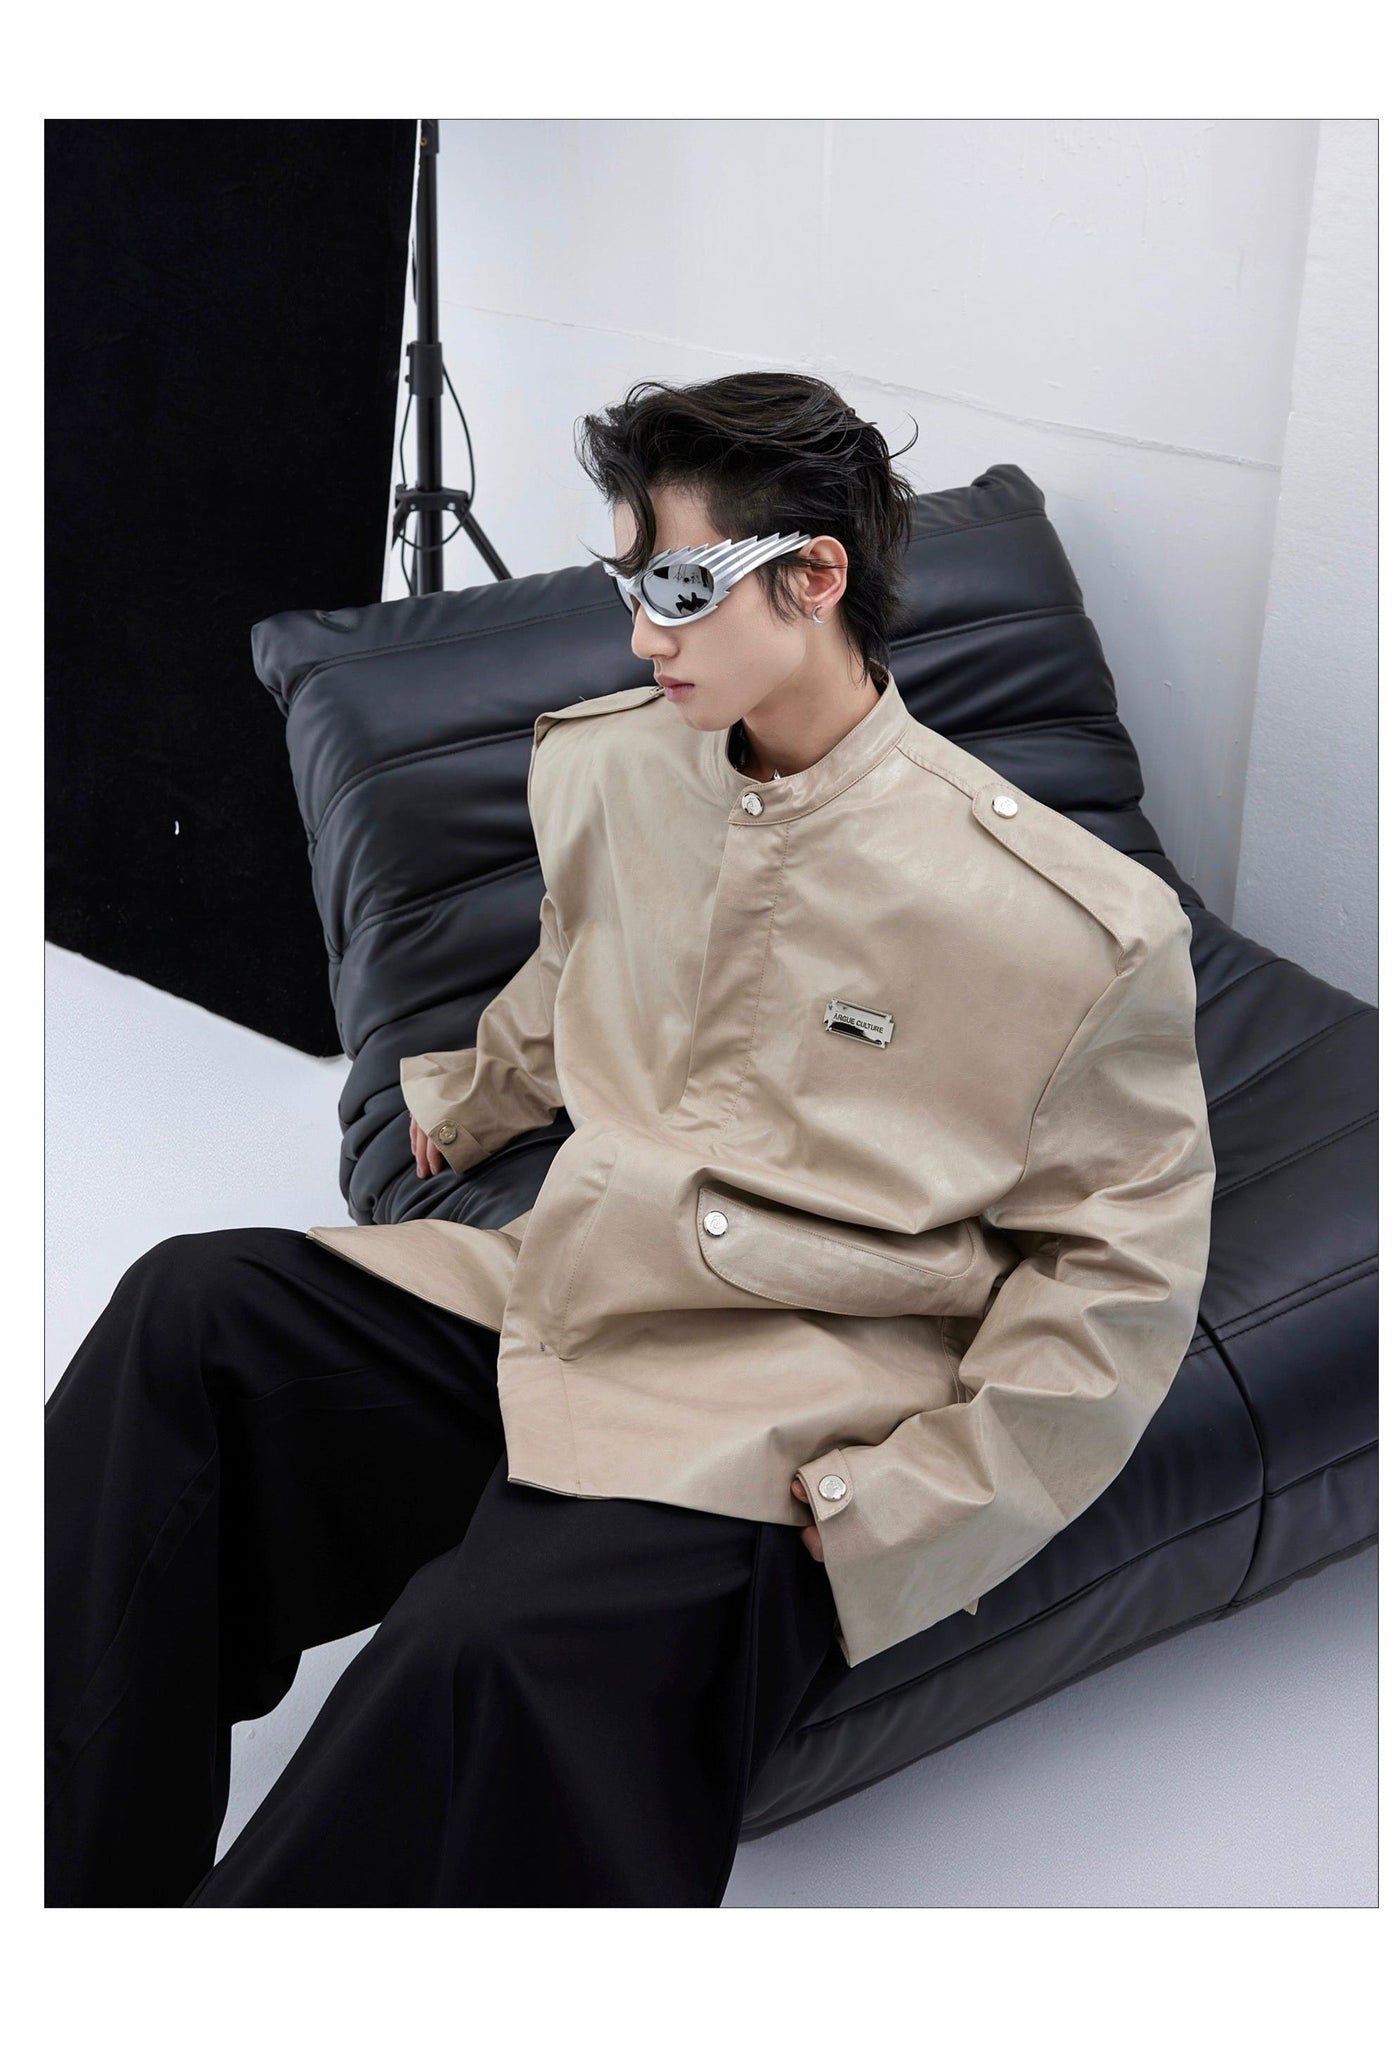 Structured Shoulder Pad PU Leather Jacket Korean Street Fashion Jacket By Argue Culture Shop Online at OH Vault